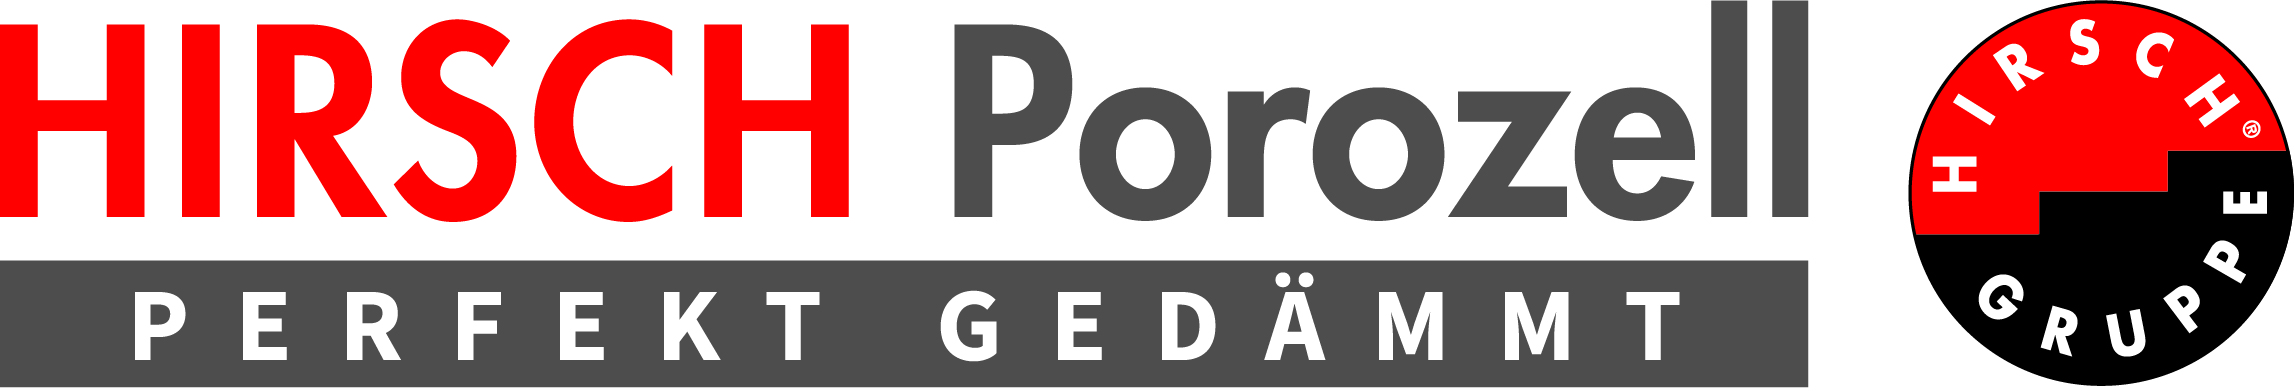 Hirsch Porozell Logo